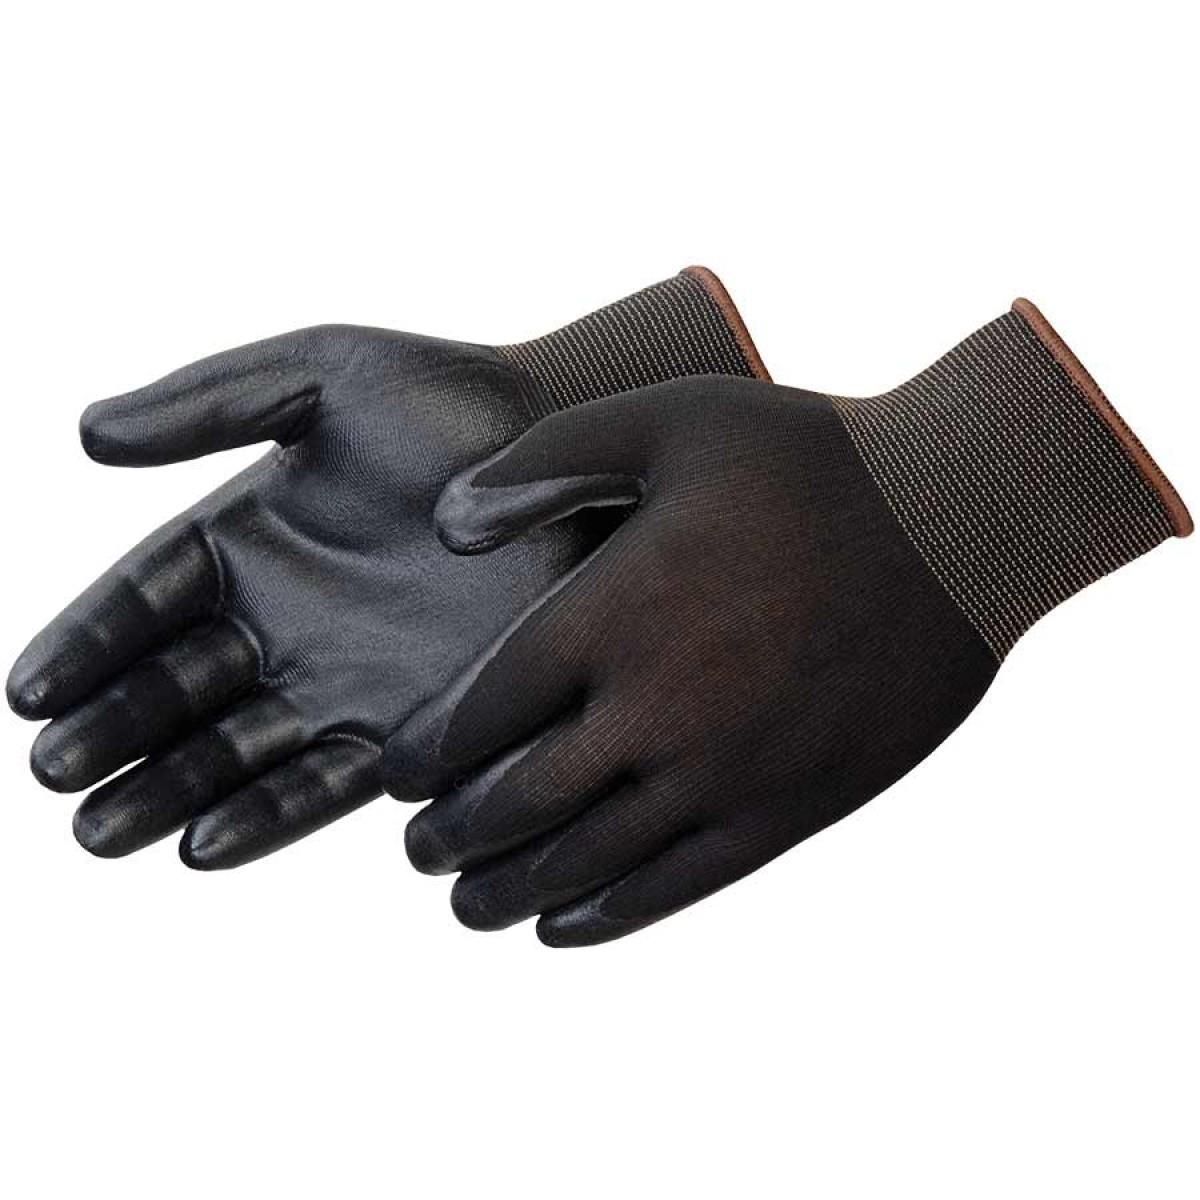 Q-GRIP BLACK NITRILE PALM COATED NYLON - Nitrile Coated Gloves